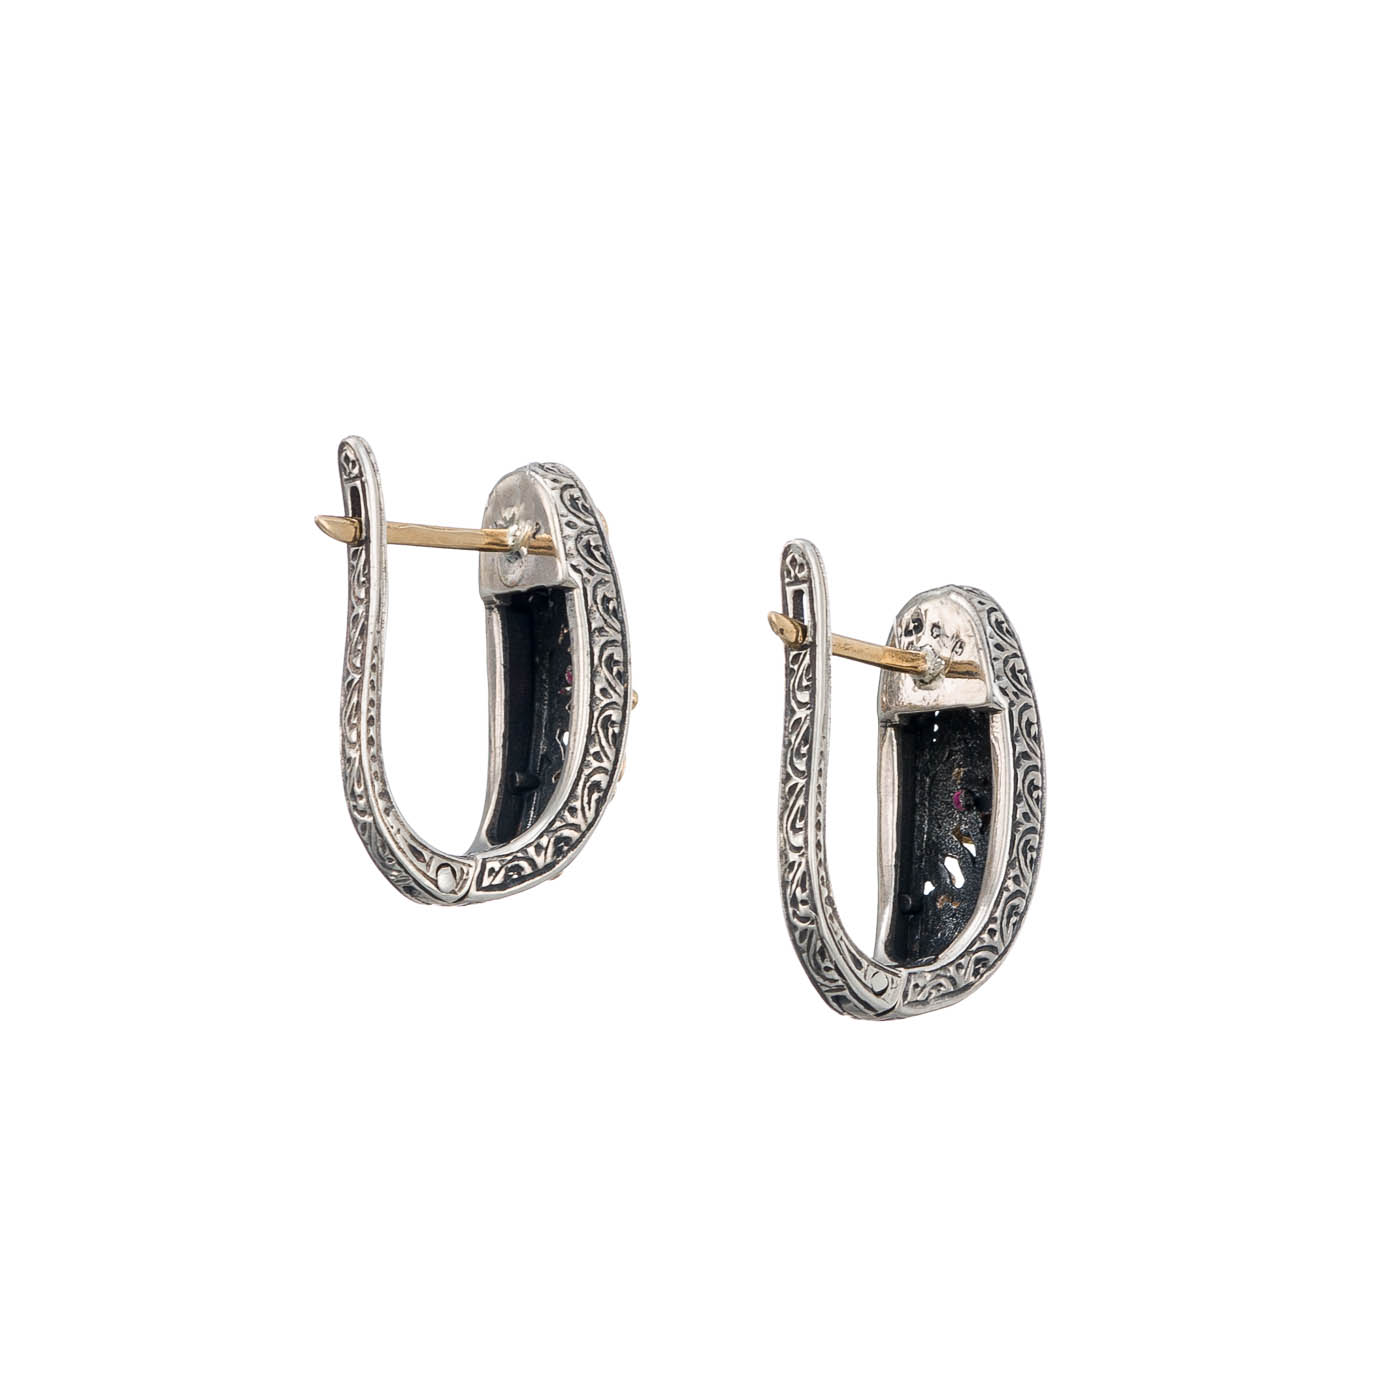 Half hoop Harmony earrings in 18K Gold and sterling silver with rubies